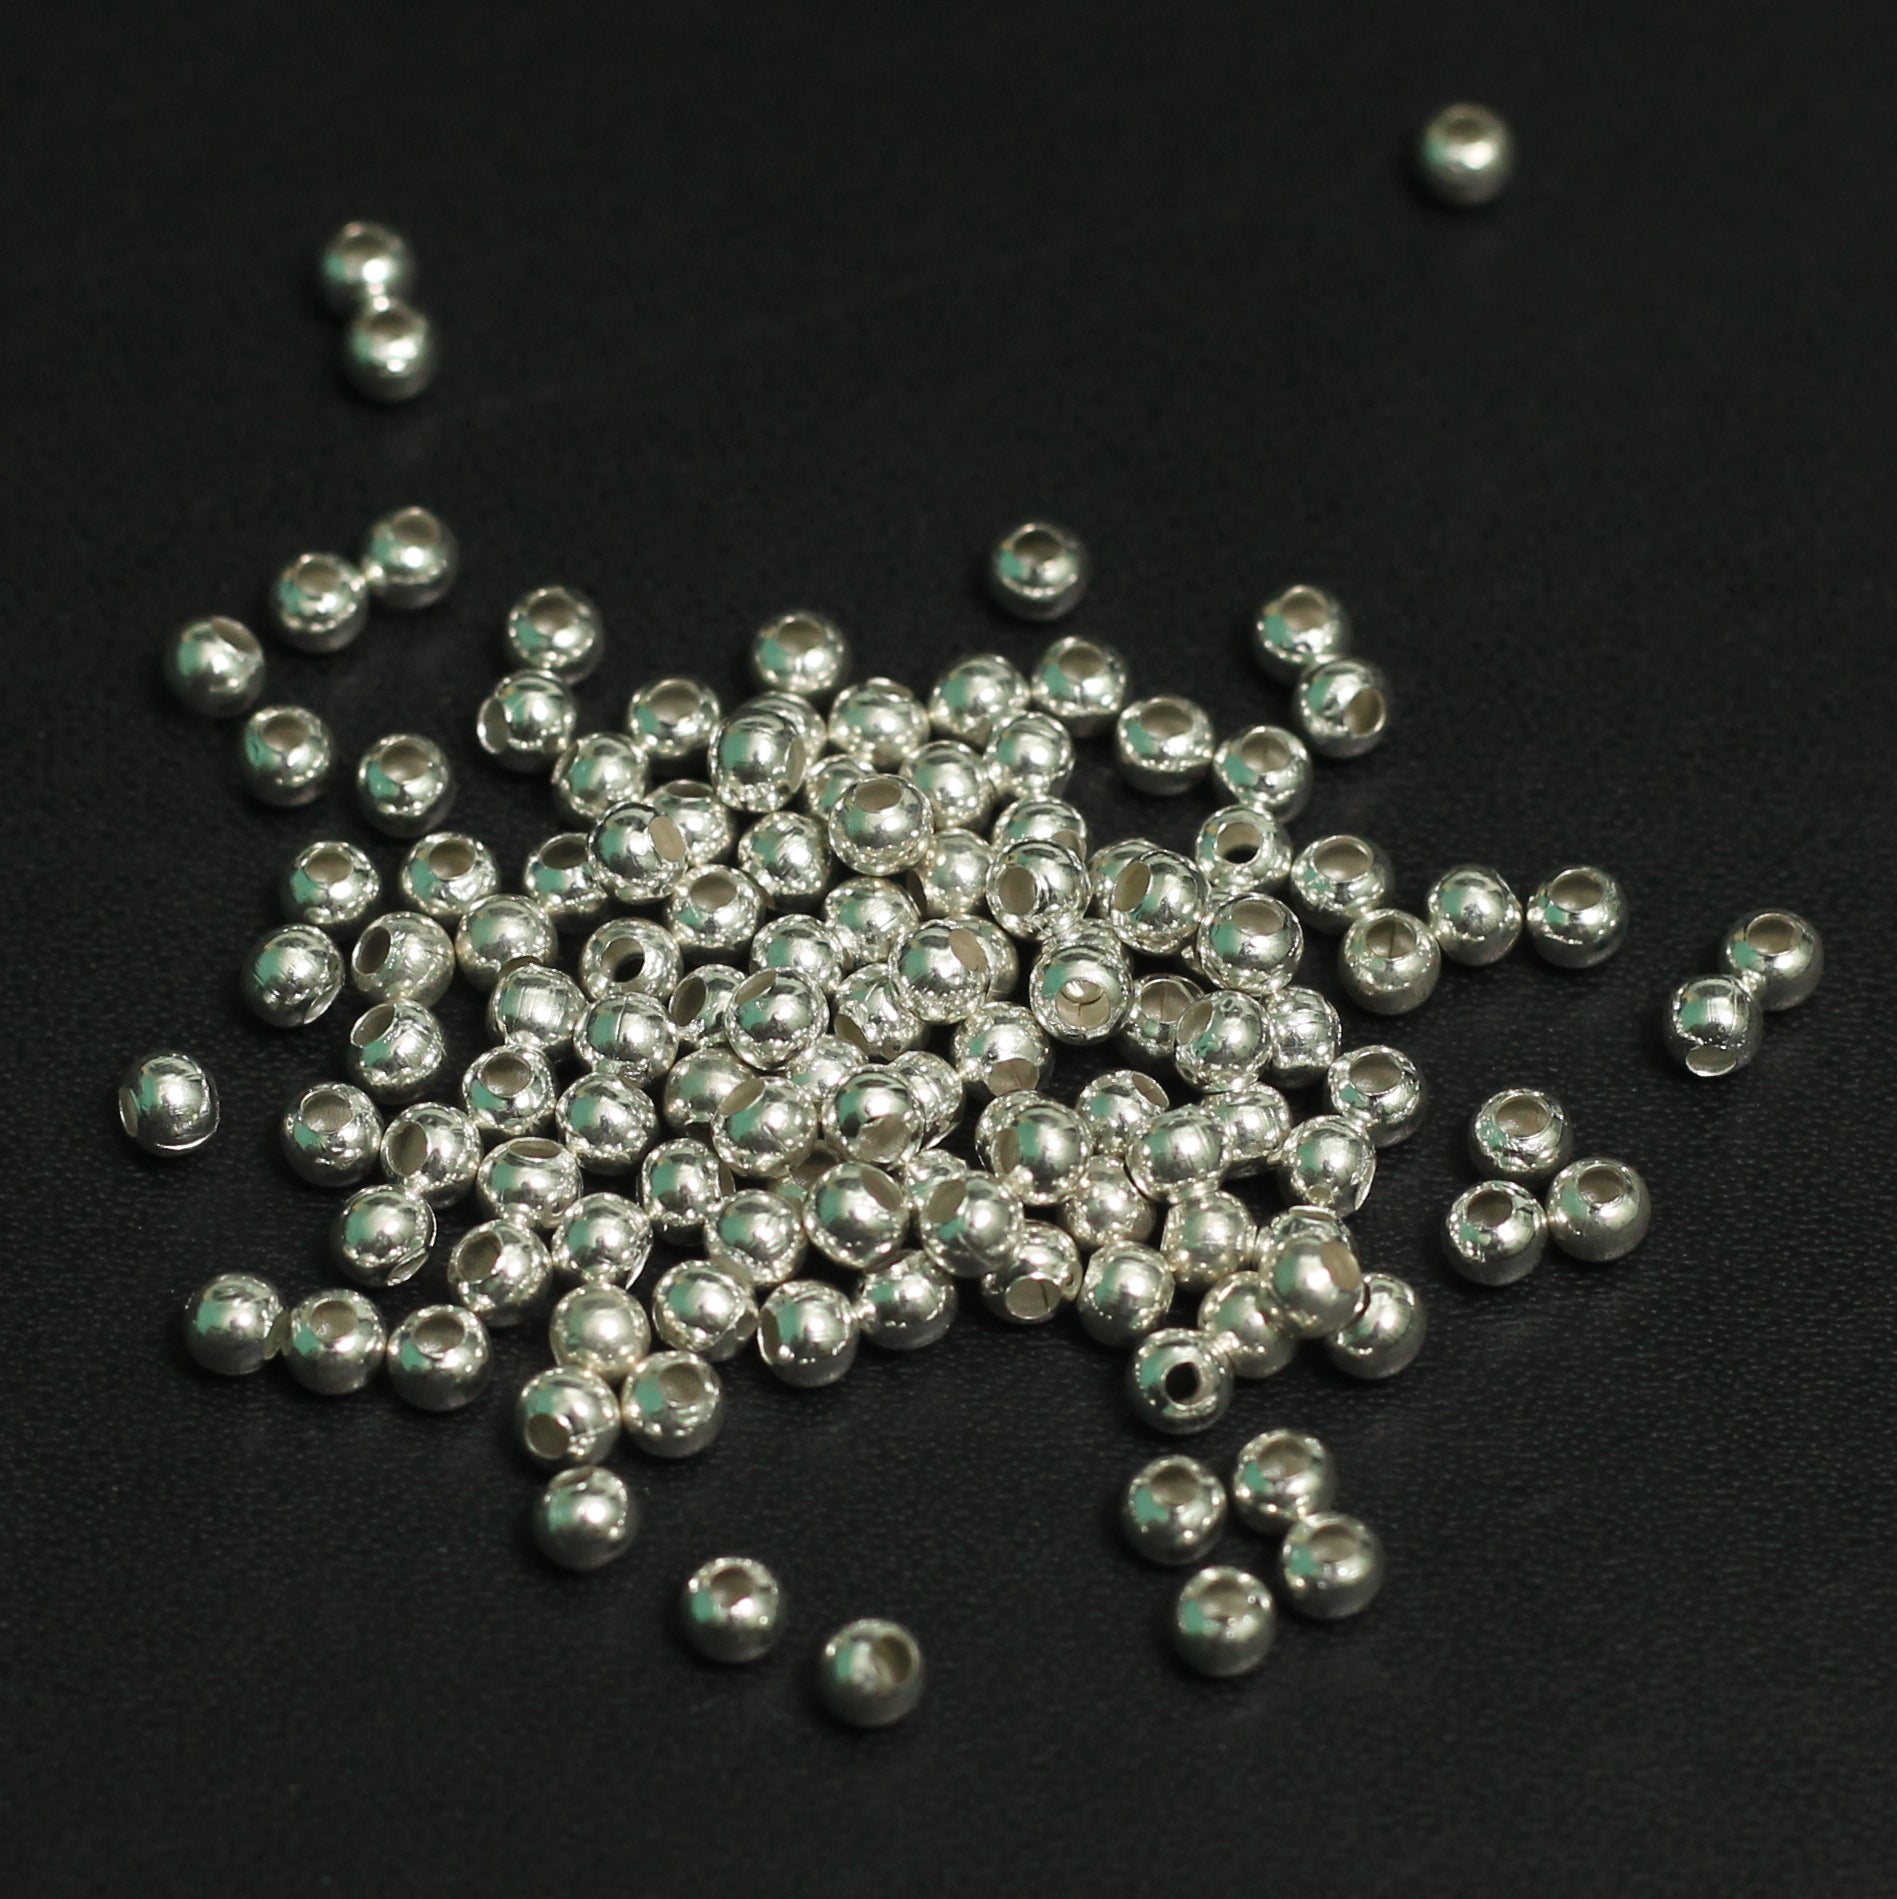 100 gm Silver Metal Balls 3mm, Approx 1950 Pcs